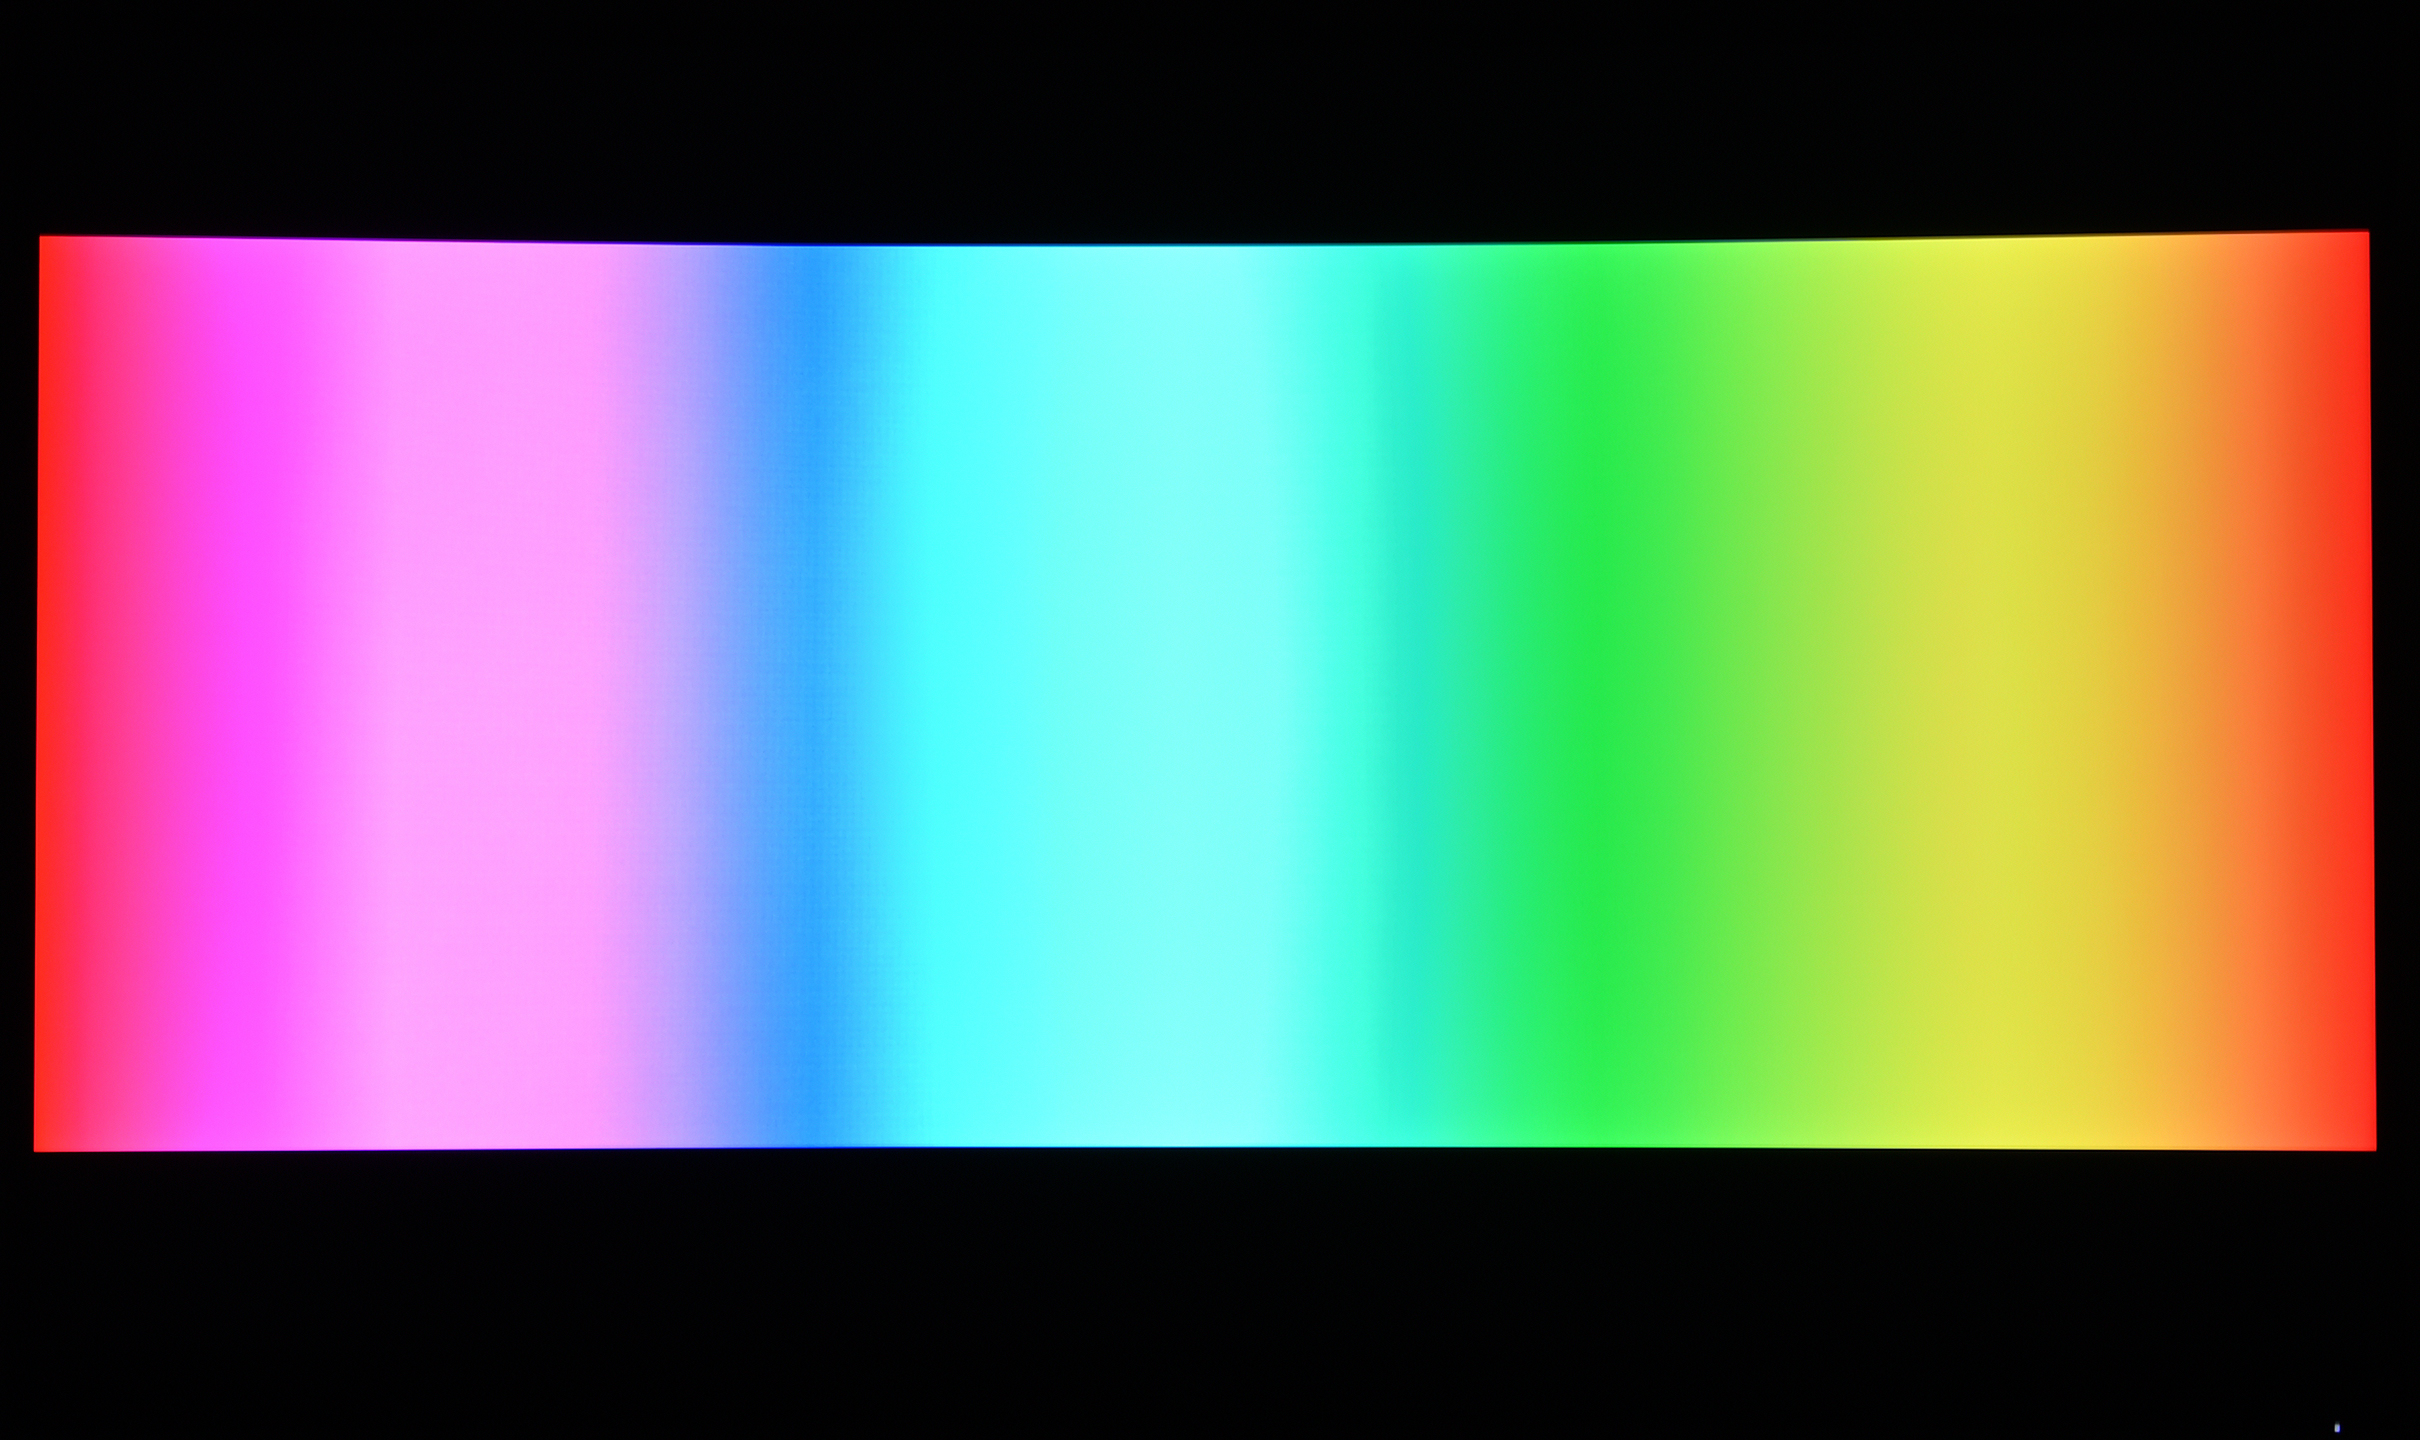 DELL_S3220DGF_Testbild_Farbverlauf.jpg